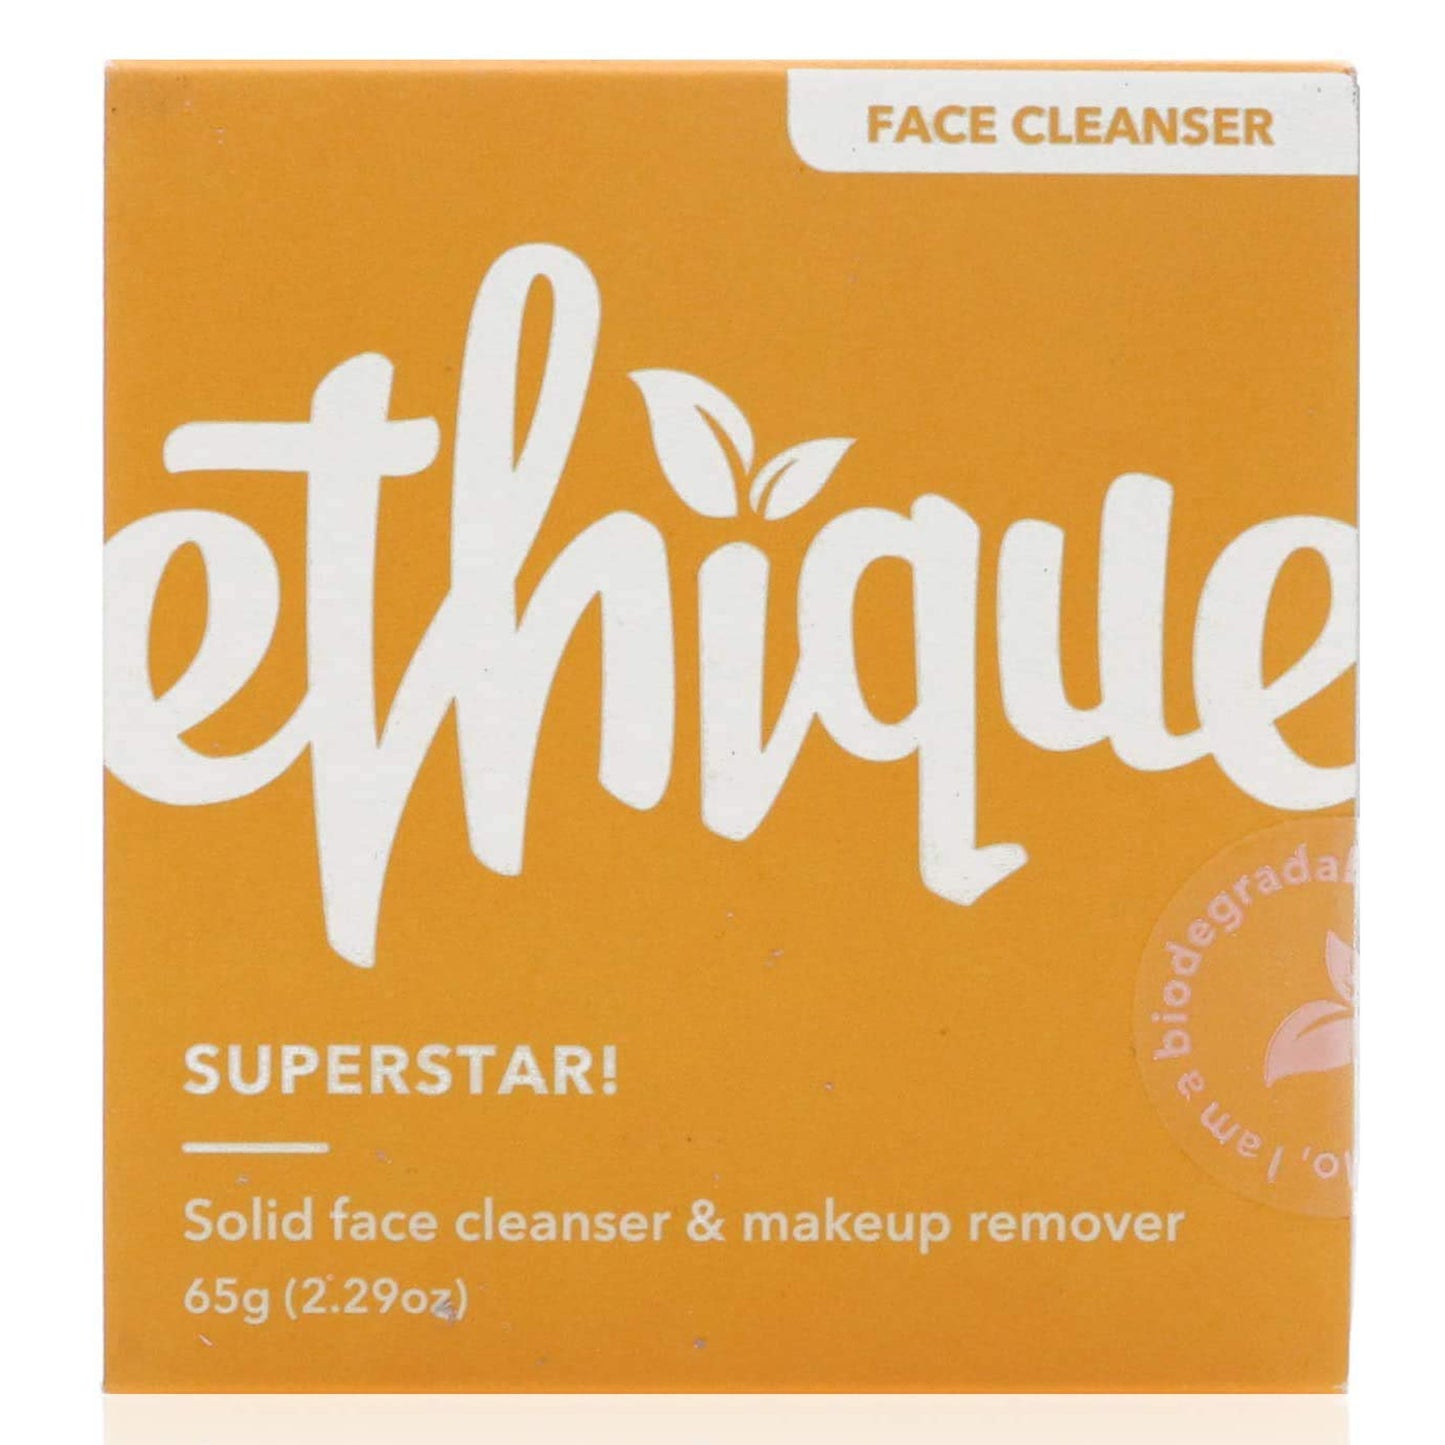 SuperStar Face Cleanser